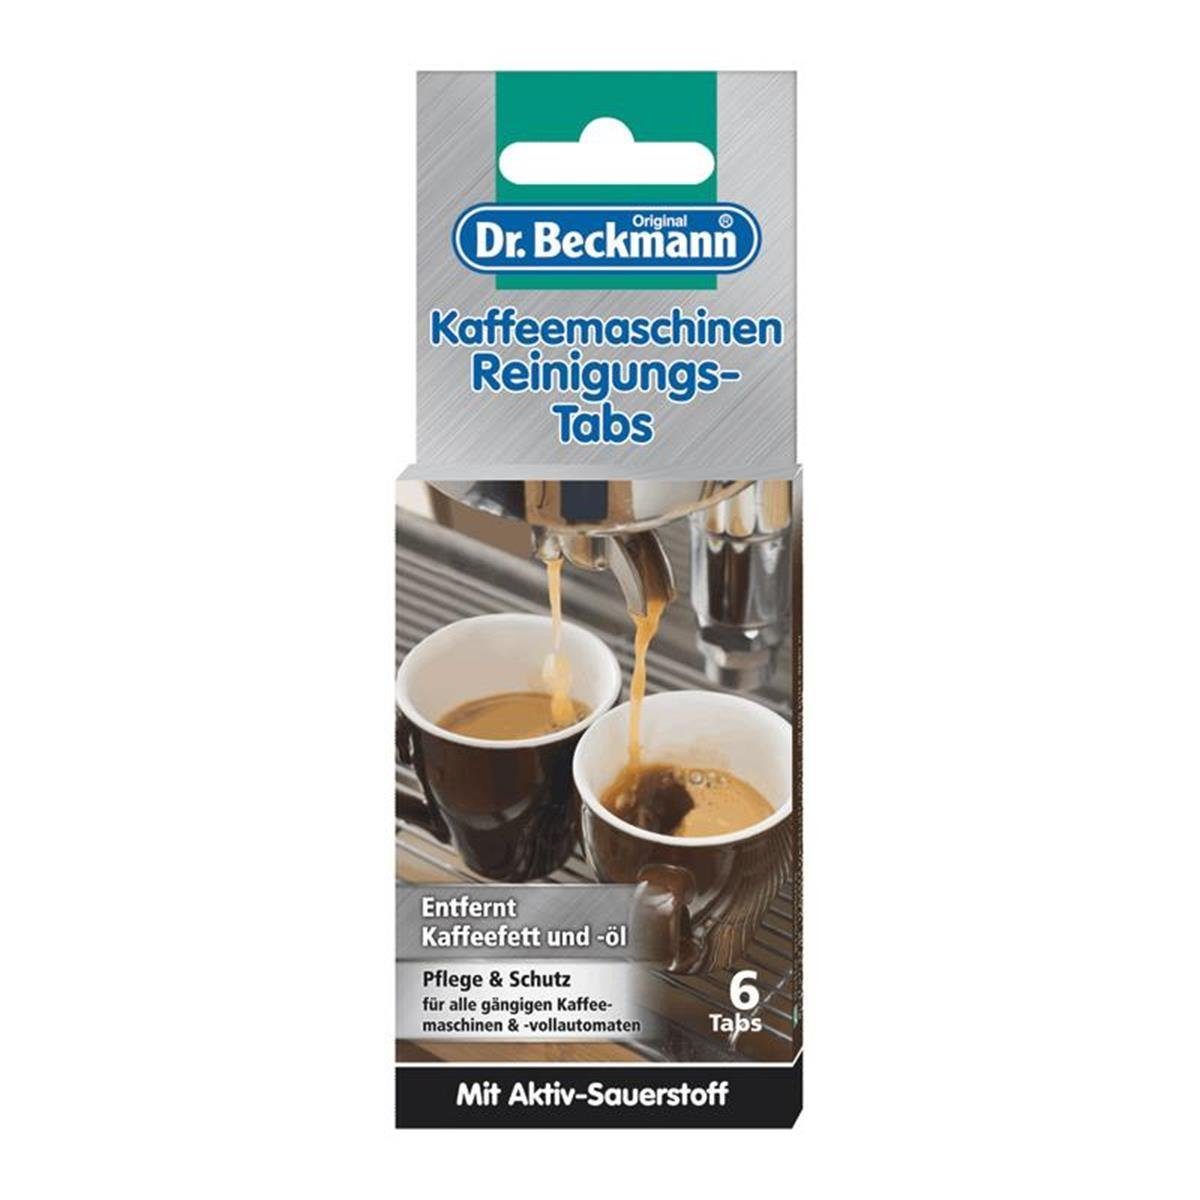 Reinigungs-Tabs Tabs 6 Beckmann - Reinigungstabletten Dr. Dr. Kaffeemaschinen Kaffeef Beckmann Entfernt